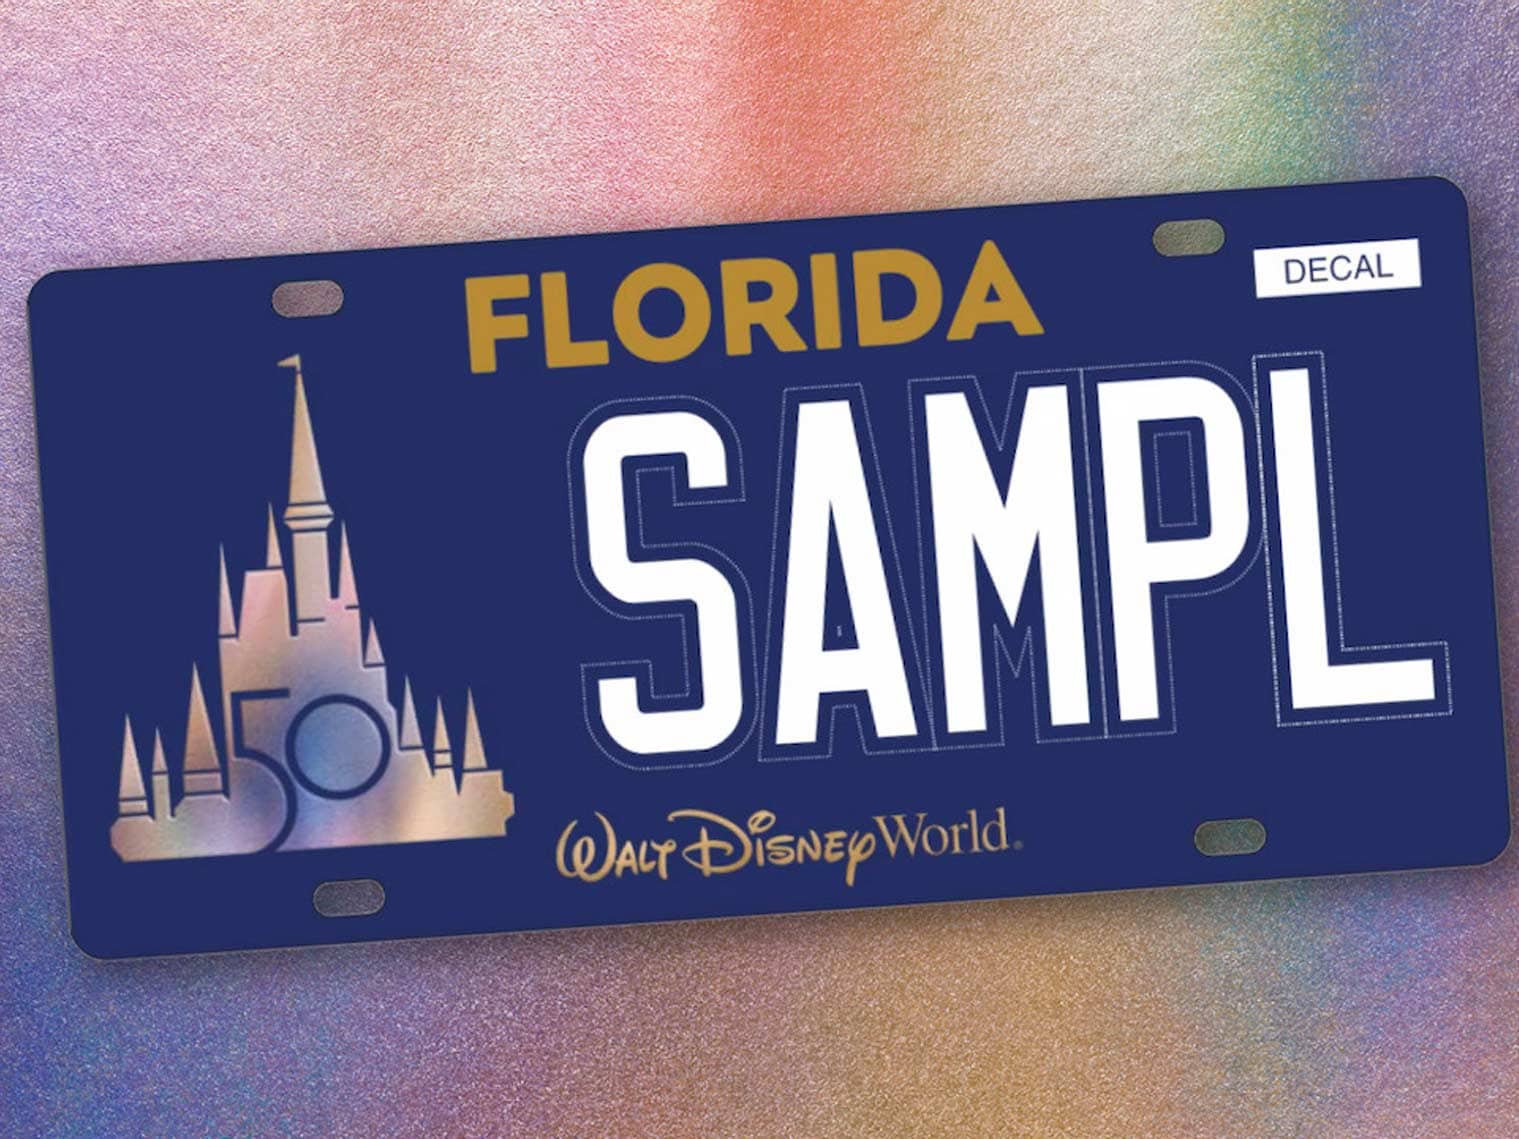 Walt Disney World license plate for Florida residents.